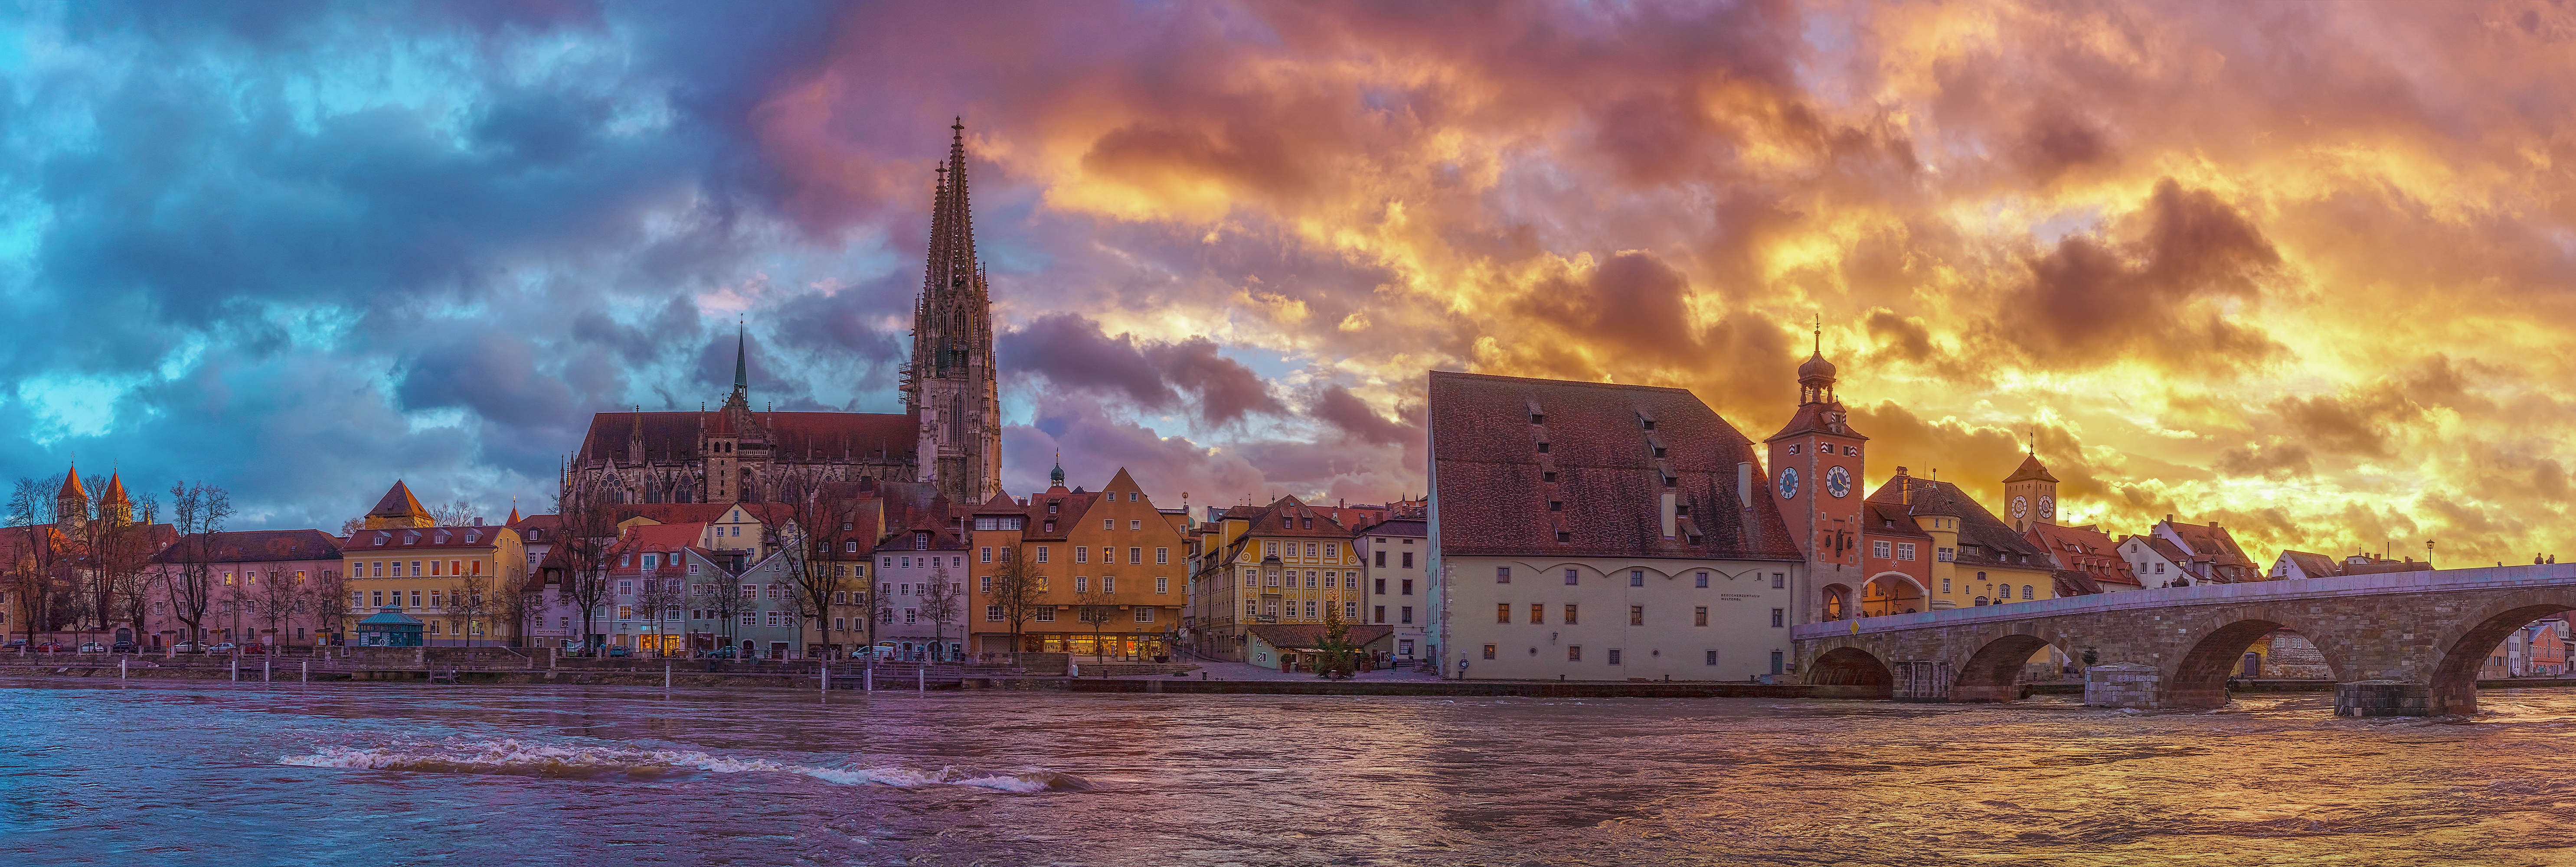 Regensburg Germany Sky Cityscape 5940x2000